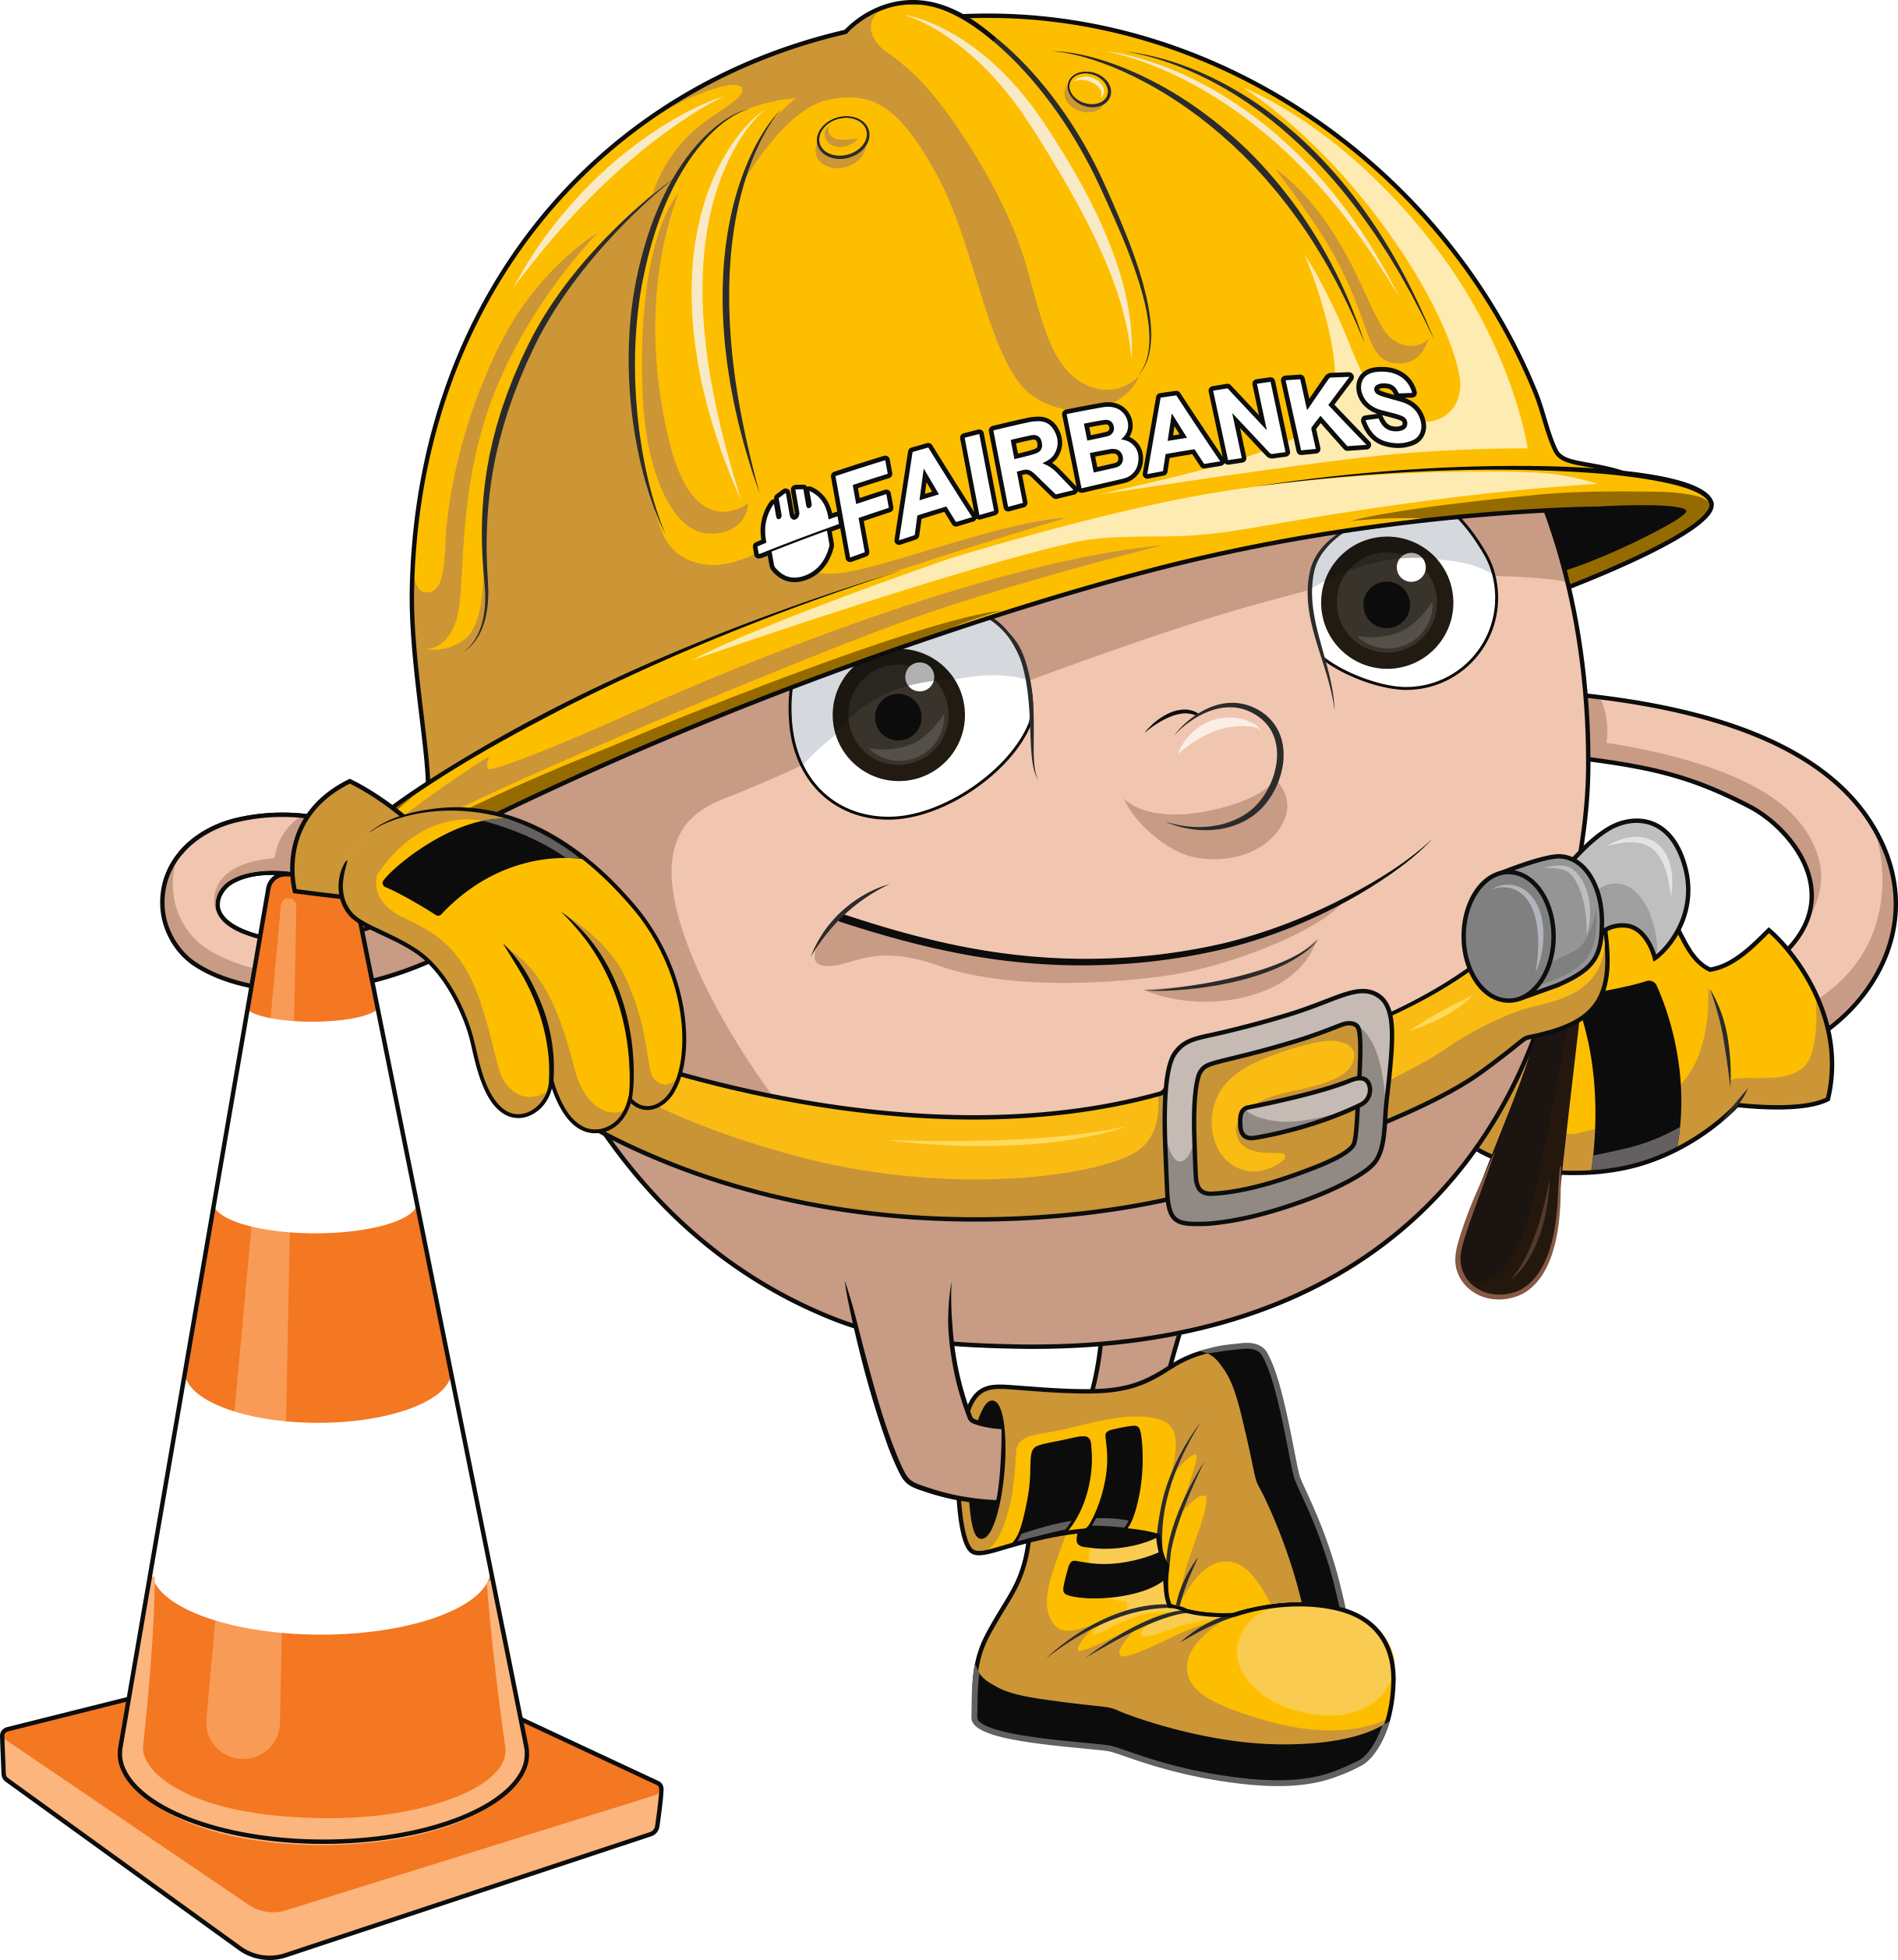 Cheap Arkansas Contractor Insurance Mascot